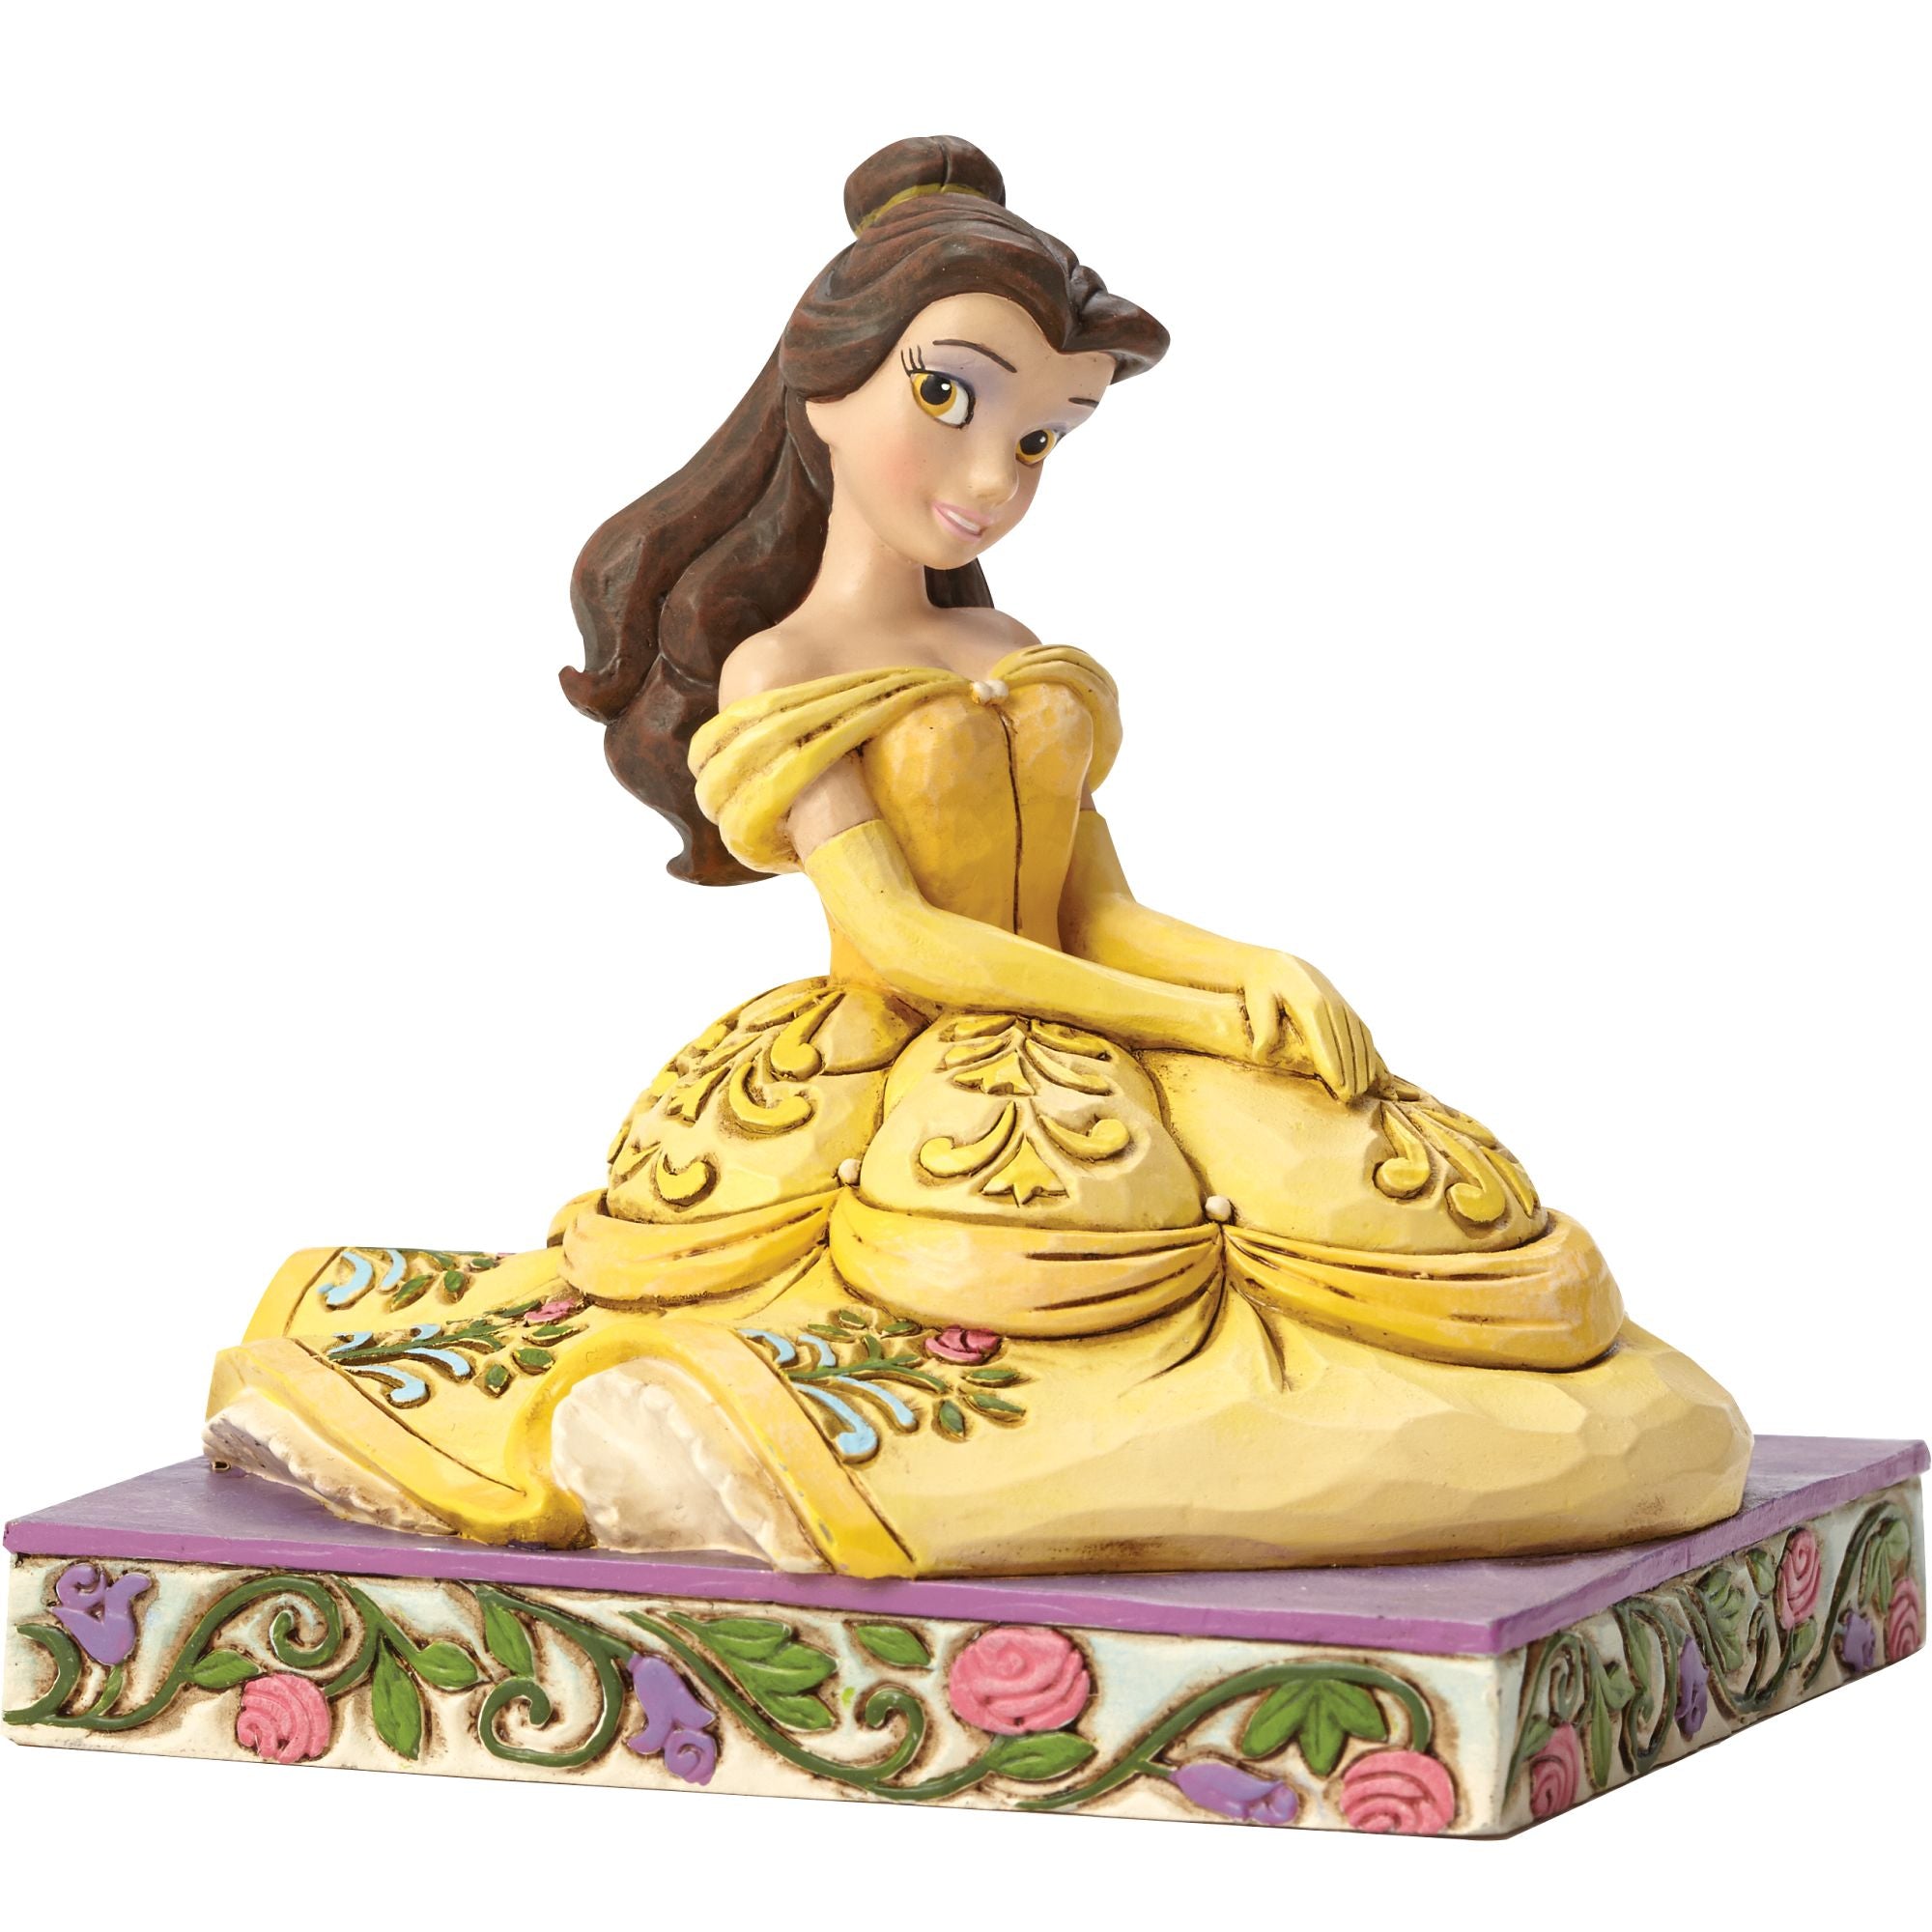 Cendrillon Personality Pose - Disney Traditions